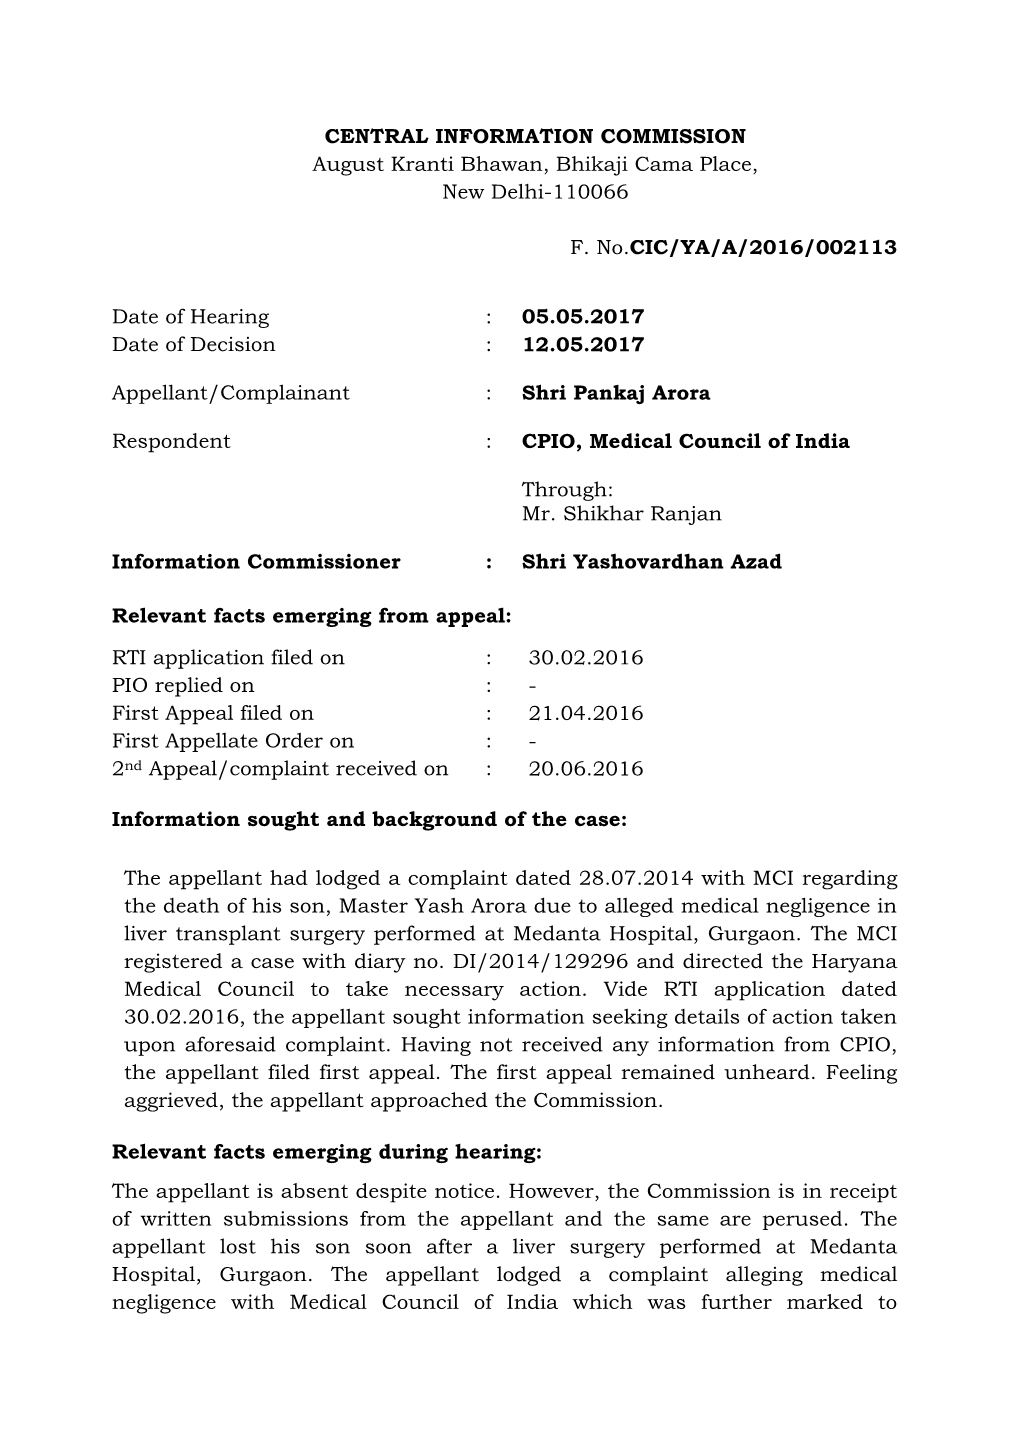 CENTRAL INFORMATION COMMISSION August Kranti Bhawan, Bhikaji Cama Place, New Delhi-110066